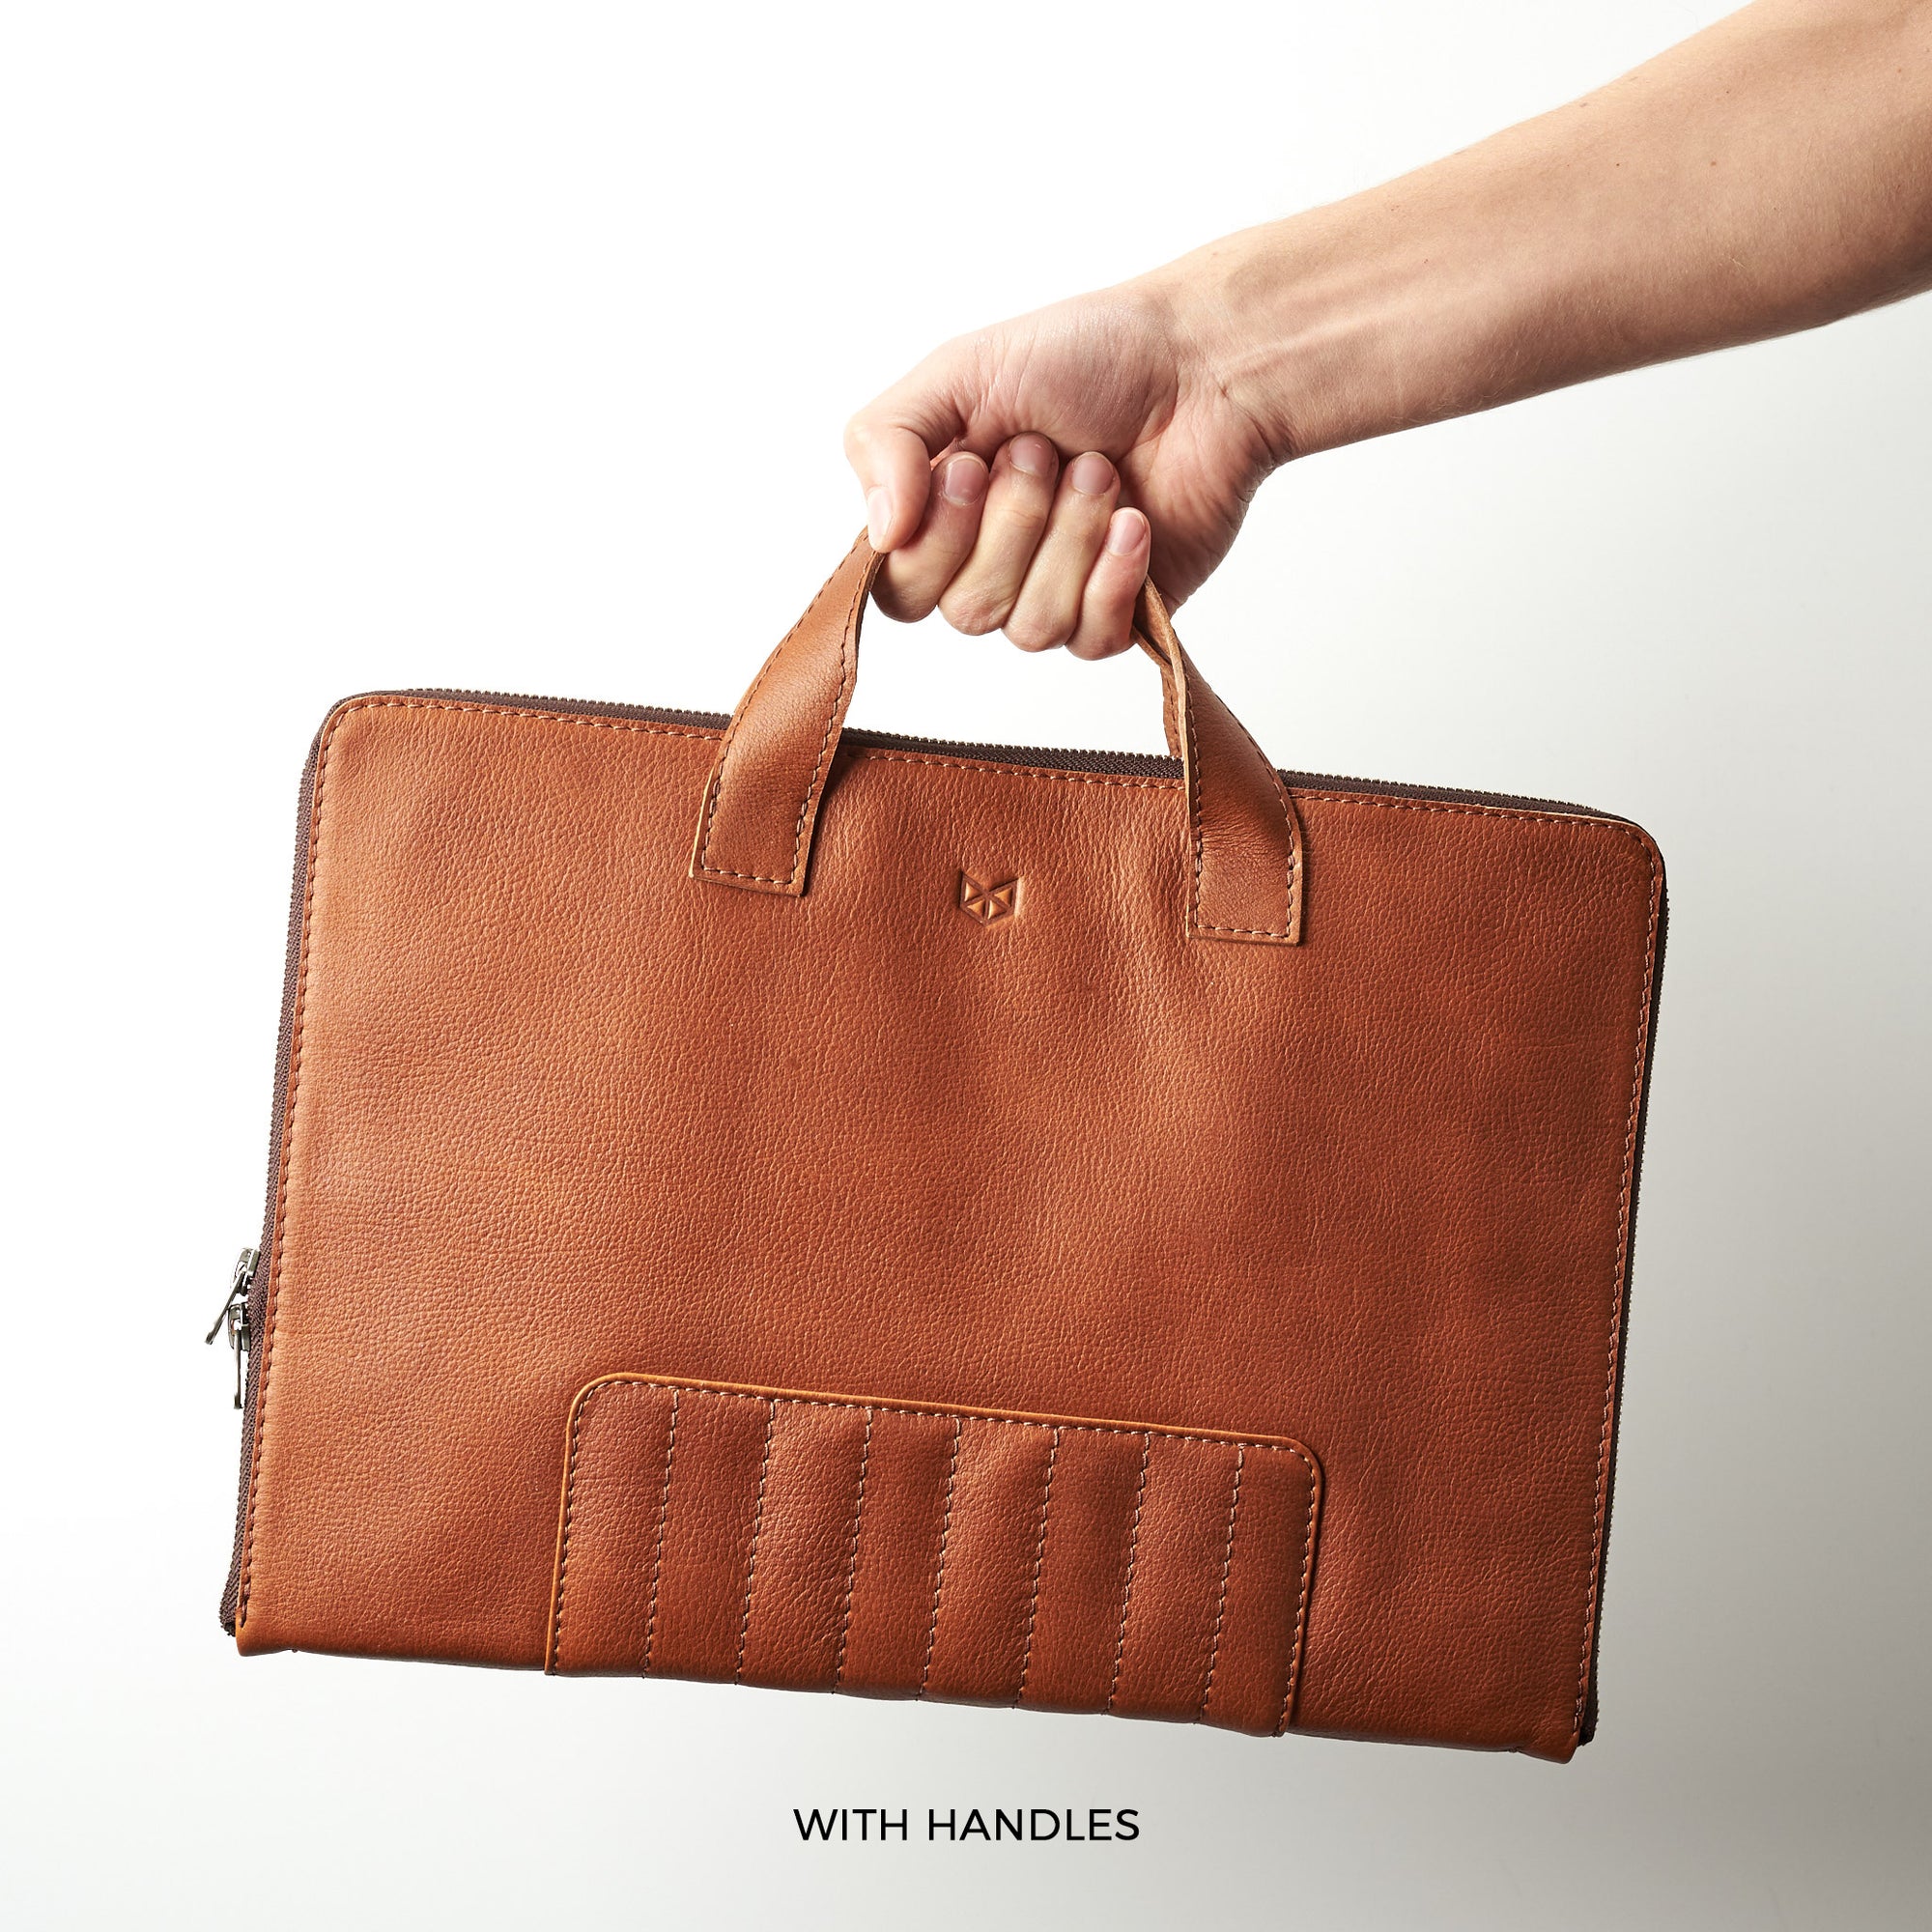 Men's leather briefcase. Tan leather laptop portfolio. Business document organizer for men.